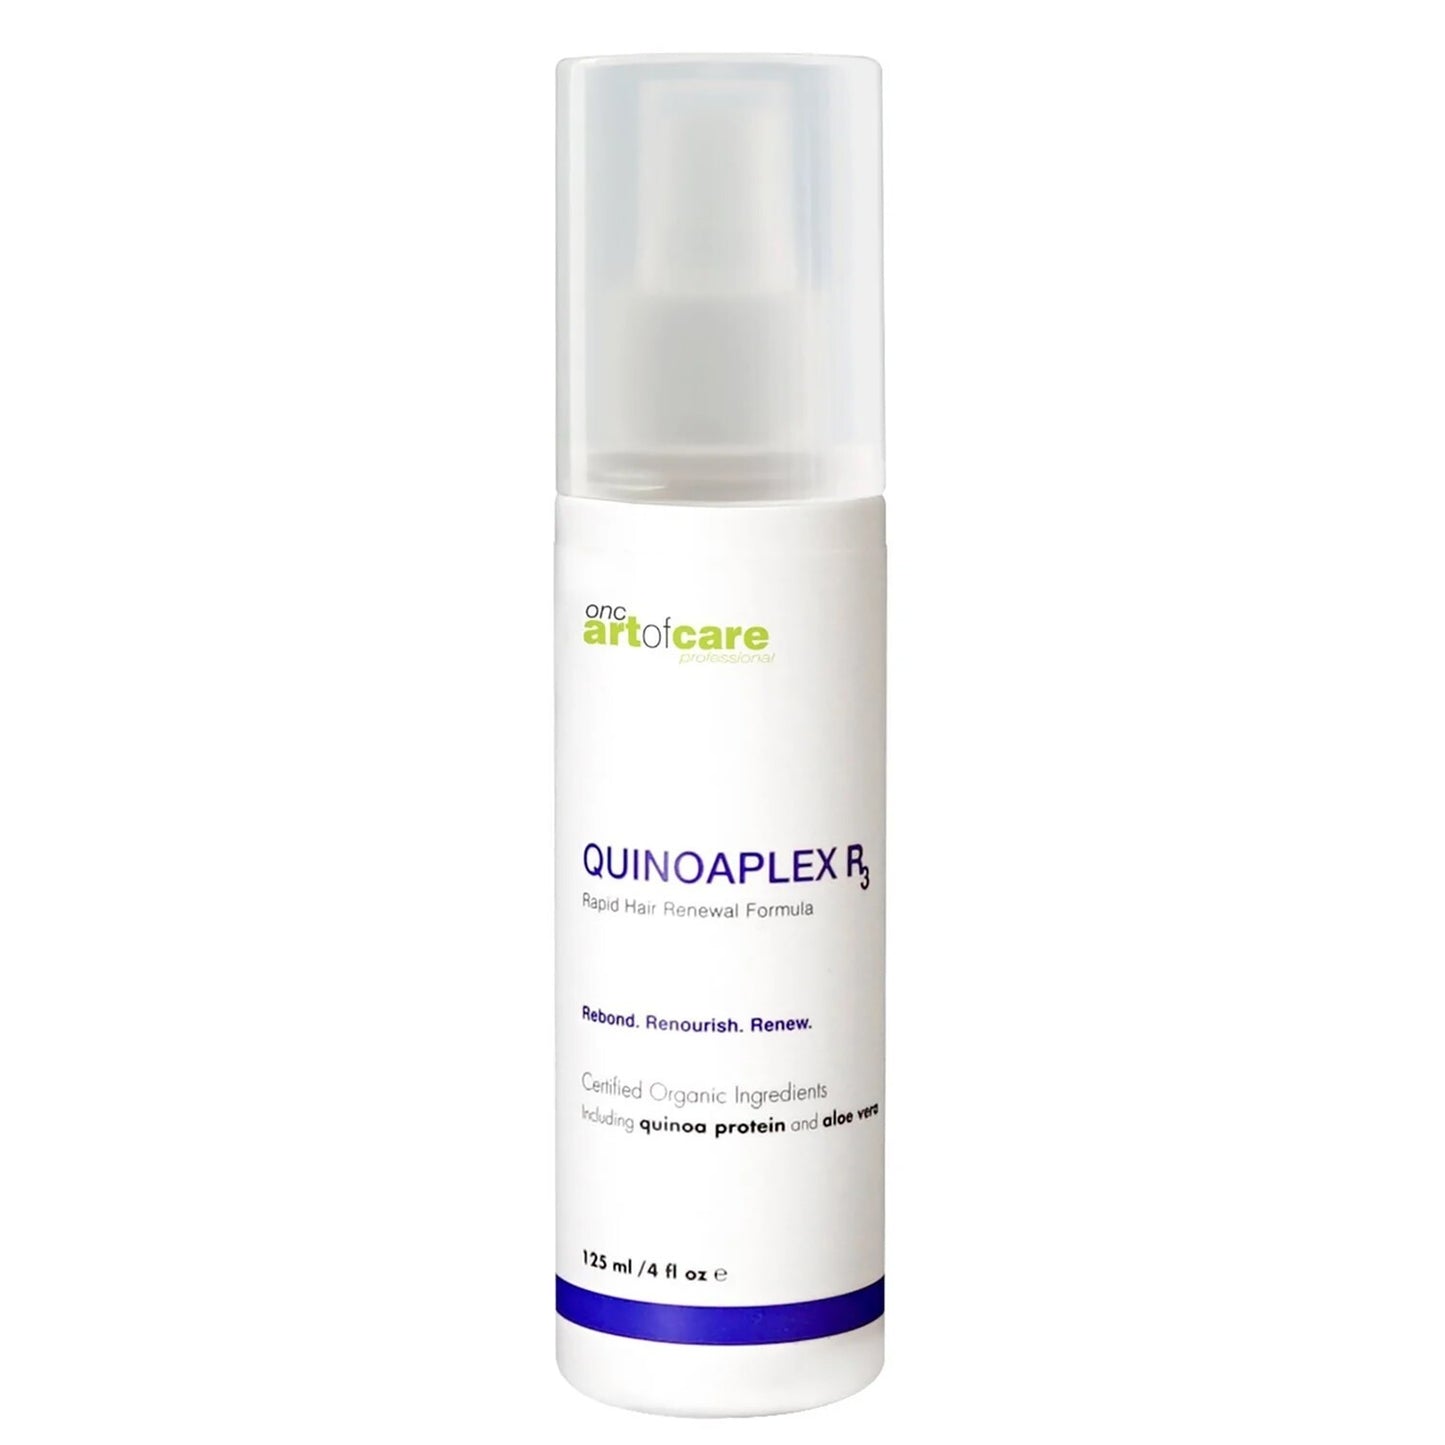 QUINOAPLEX R3 Rapid Hair Renewal Formula